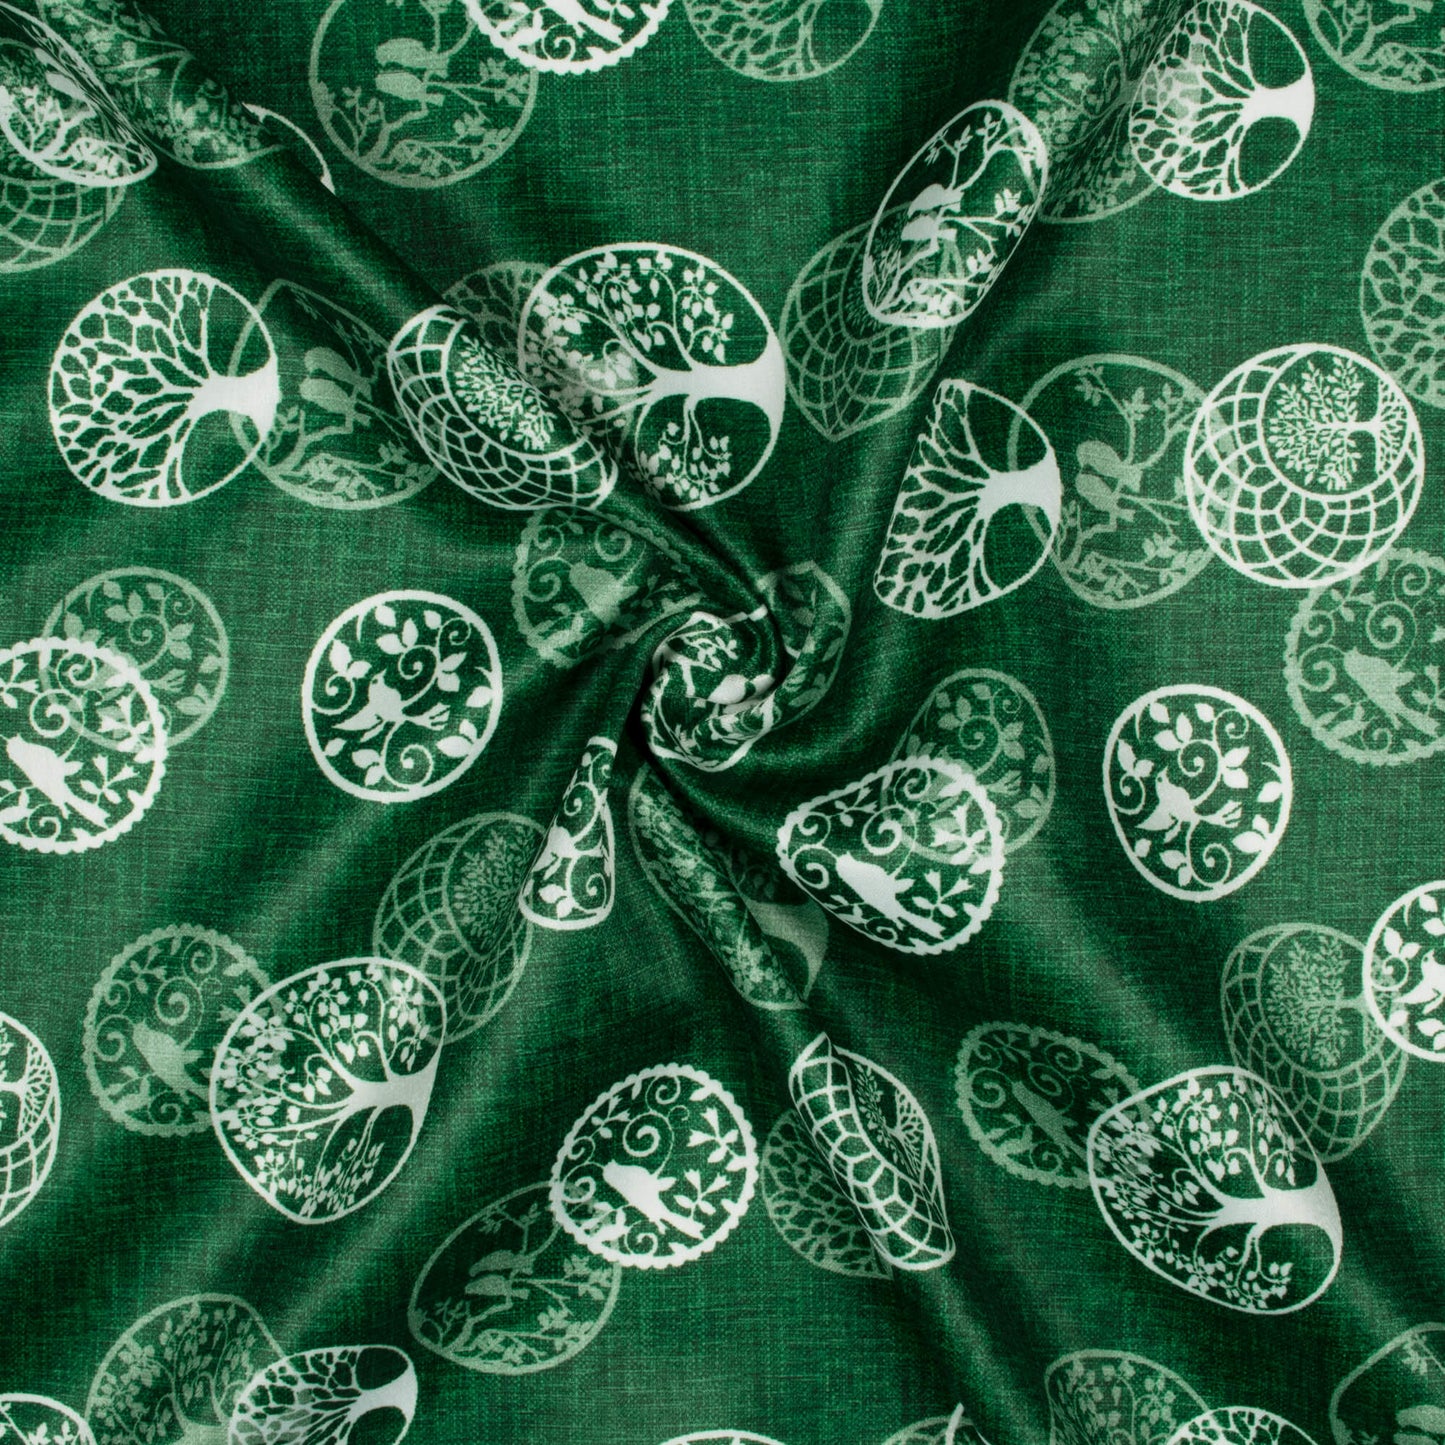 Sacramento Green And White Quirky Pattern Digital Print Lush Satin Fabric